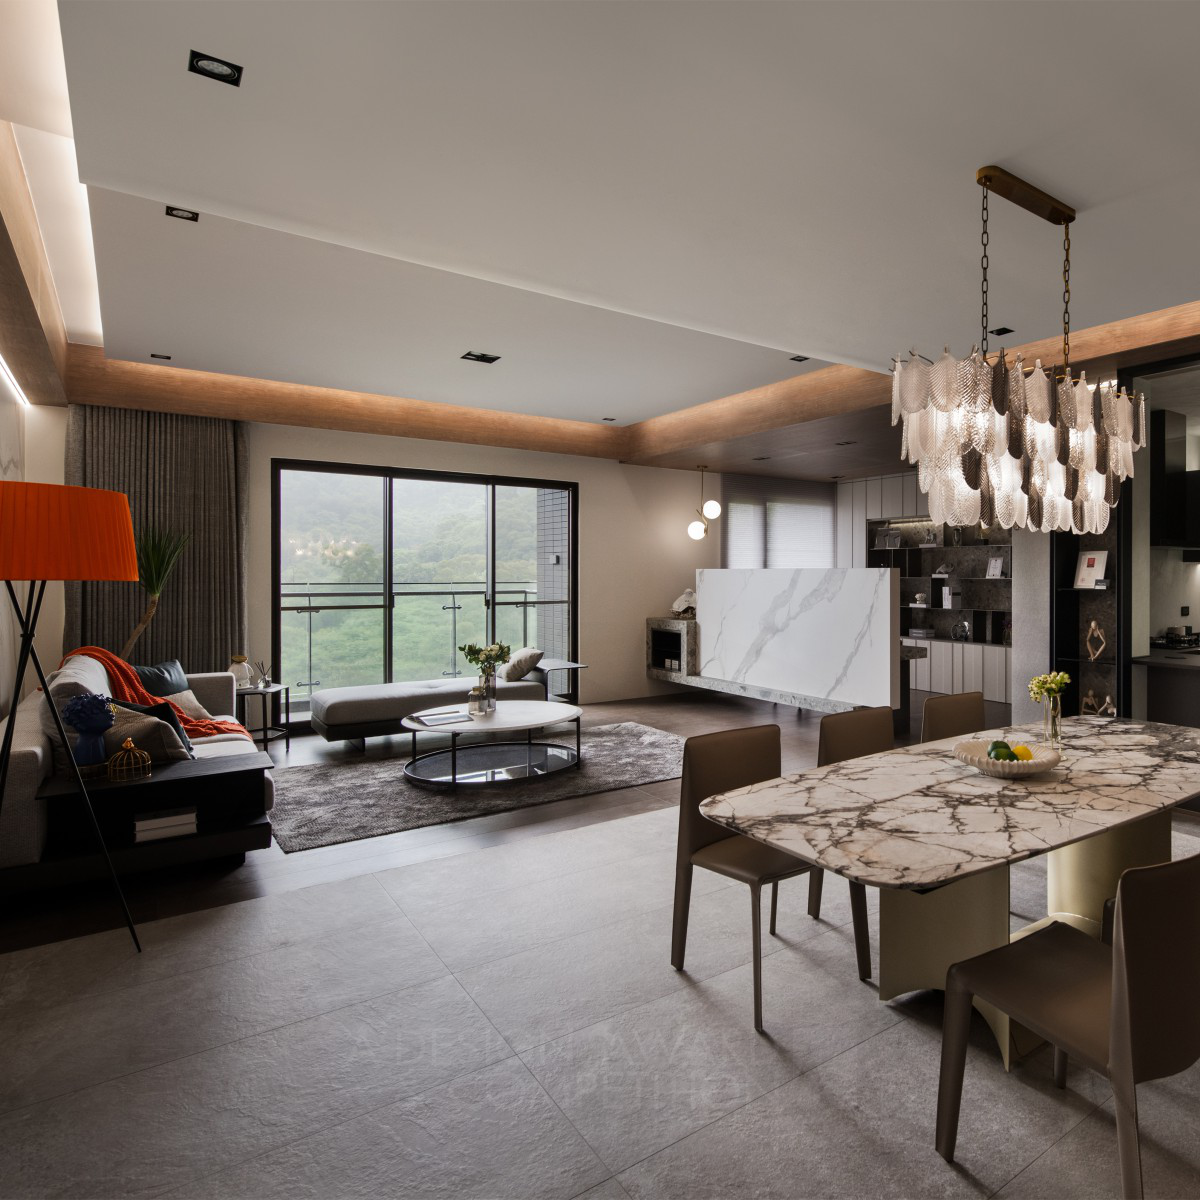 Mooho design residential interior design